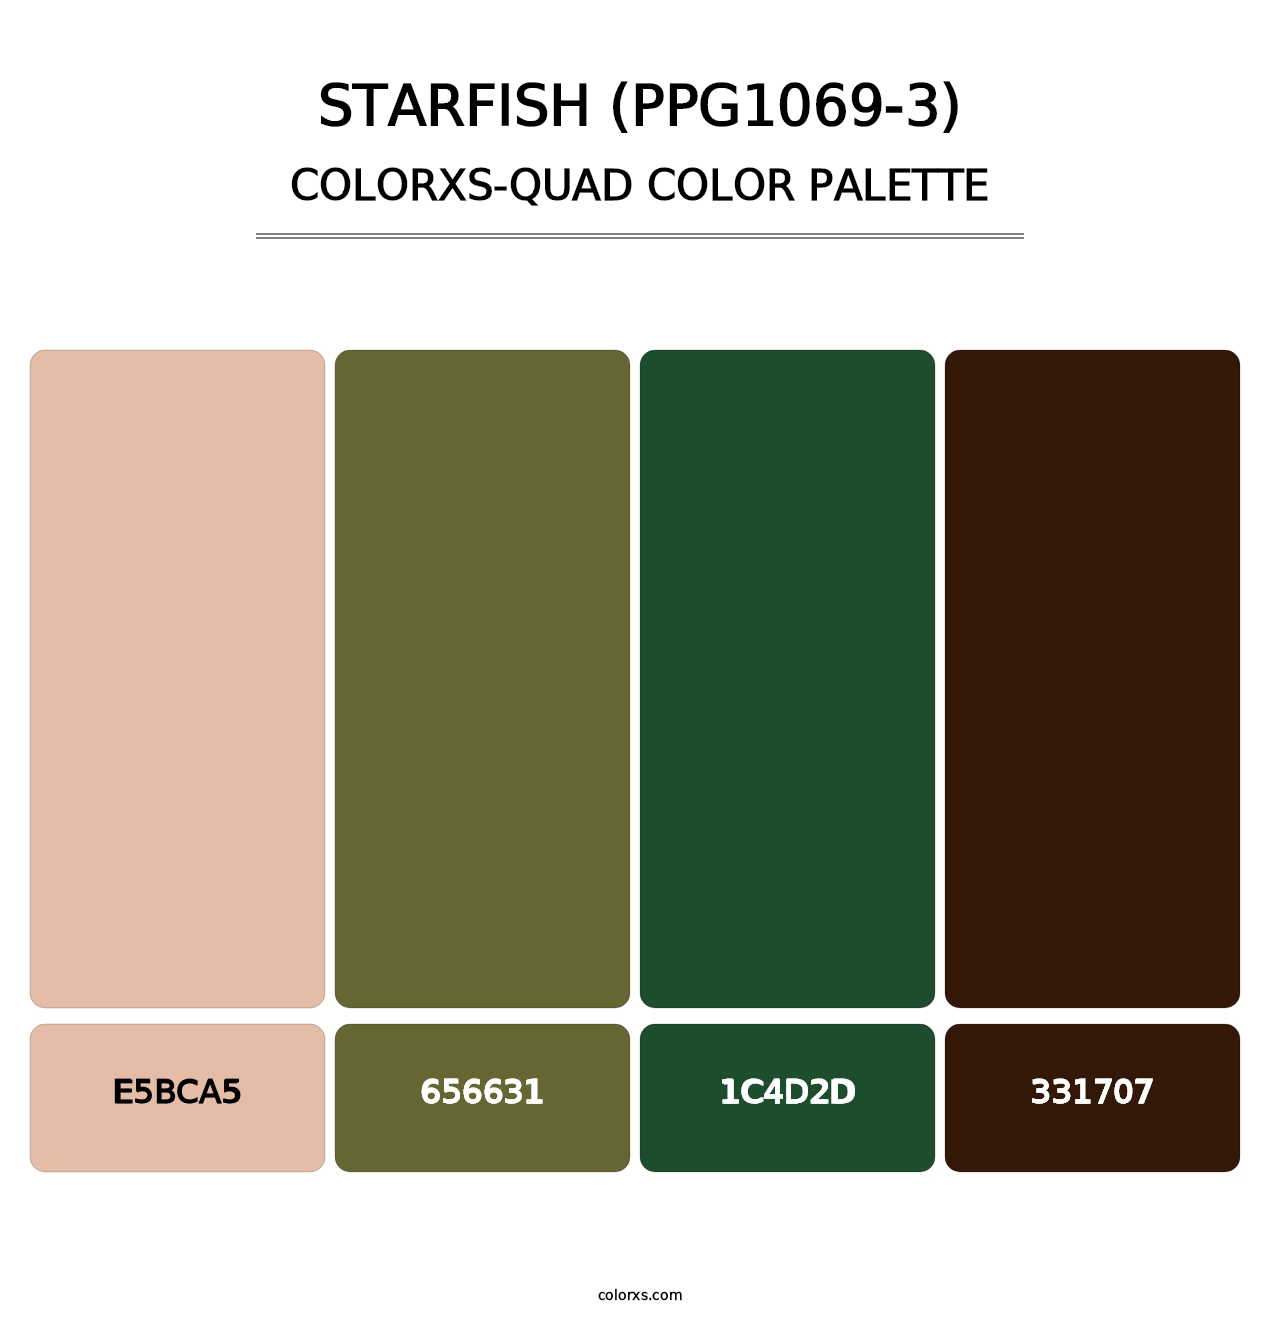 Starfish (PPG1069-3) - Colorxs Quad Palette